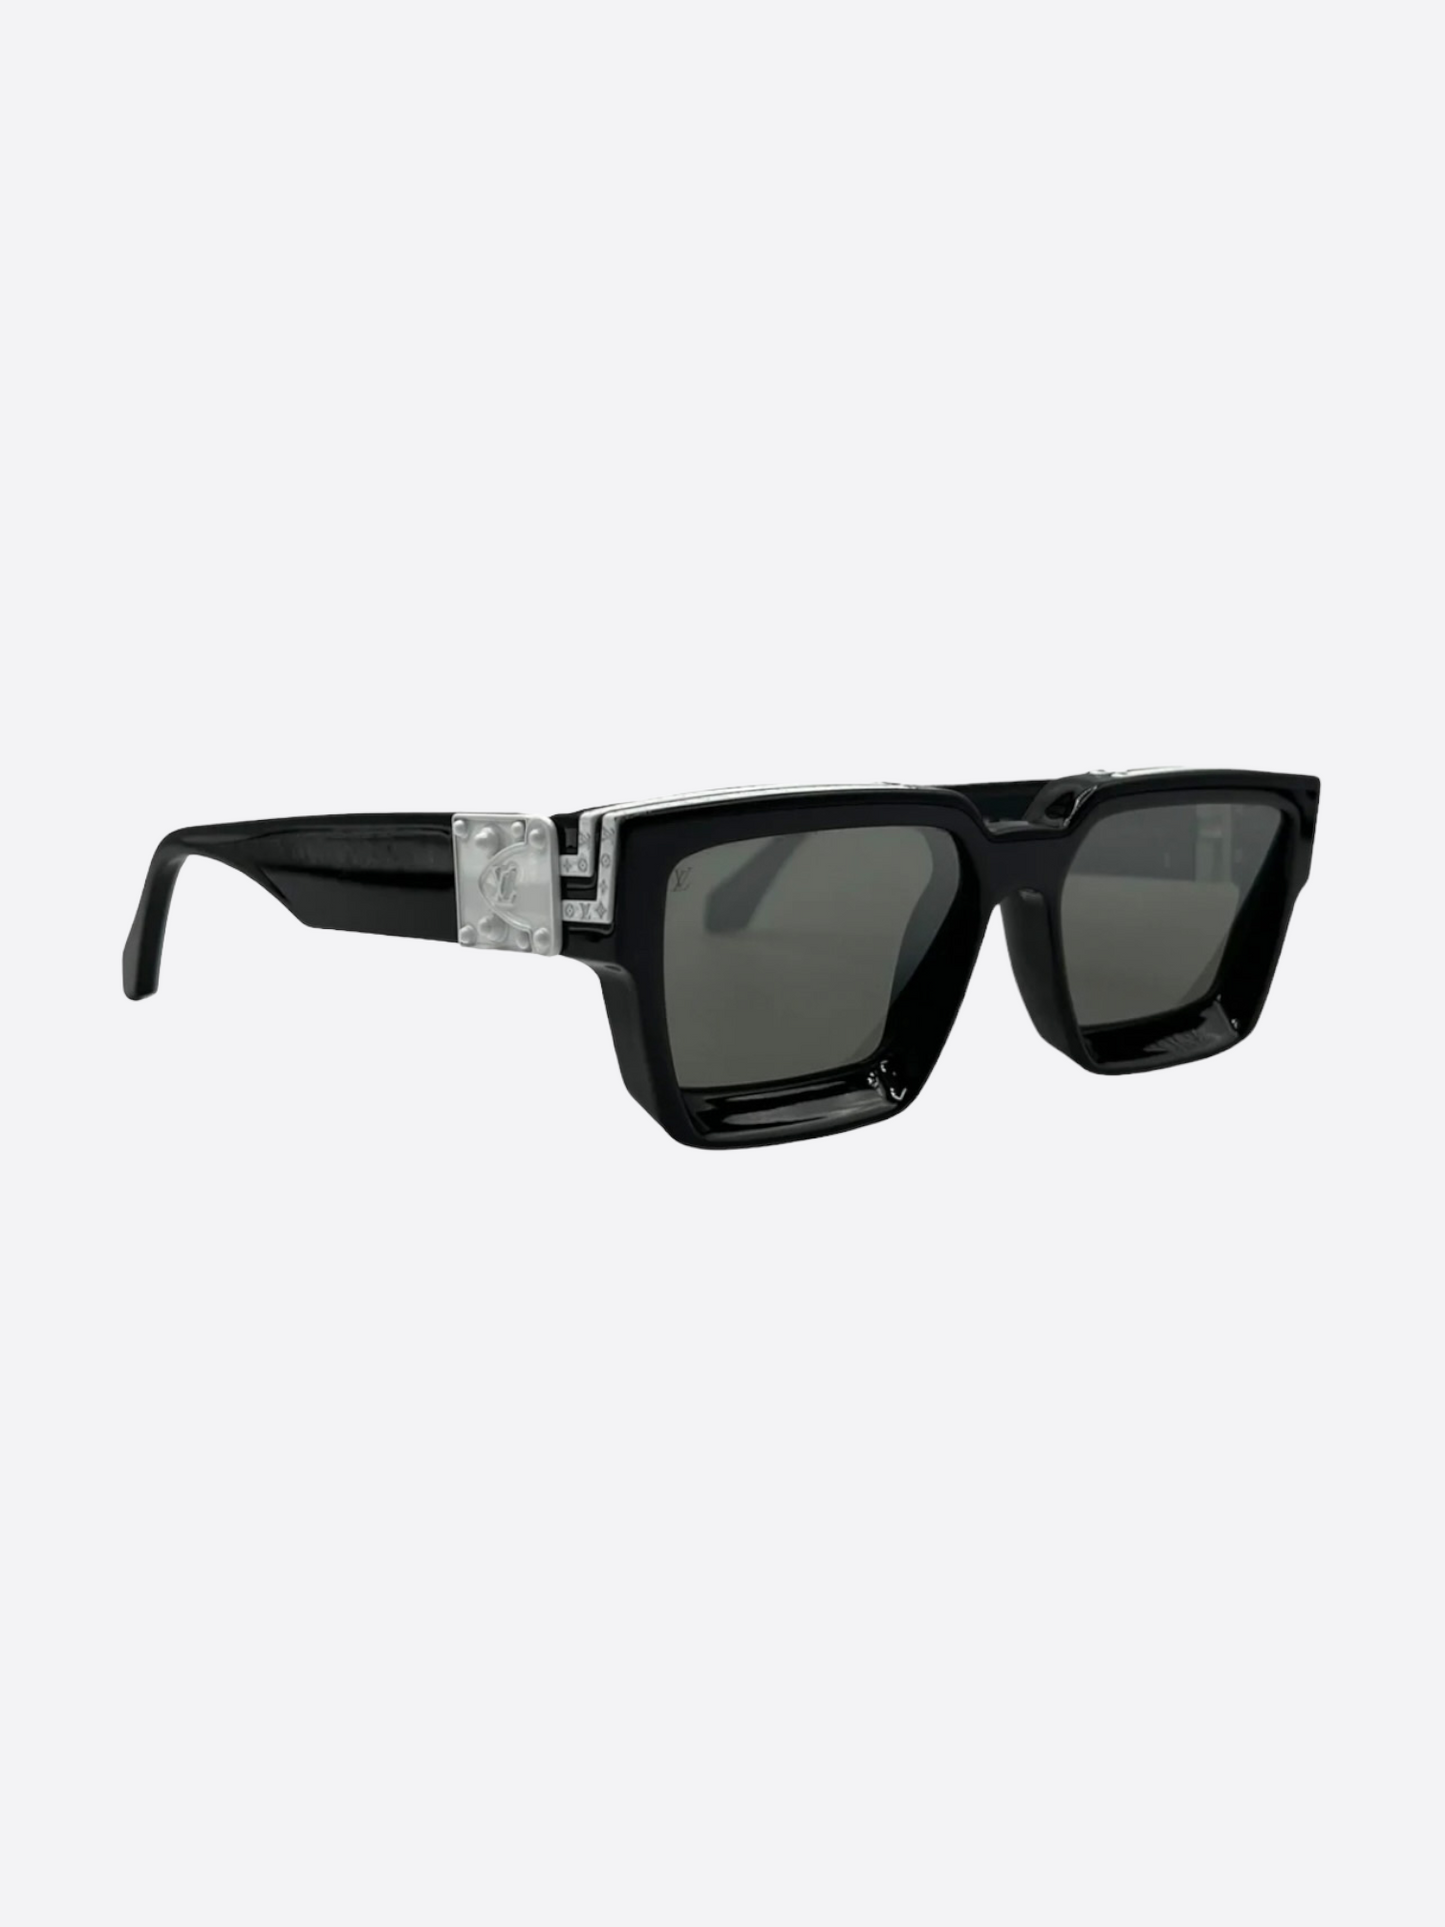 Only 218.00 usd for LOUIS VUITTON 1.1 Millionaires Sunglasses Black Online  at the Shop